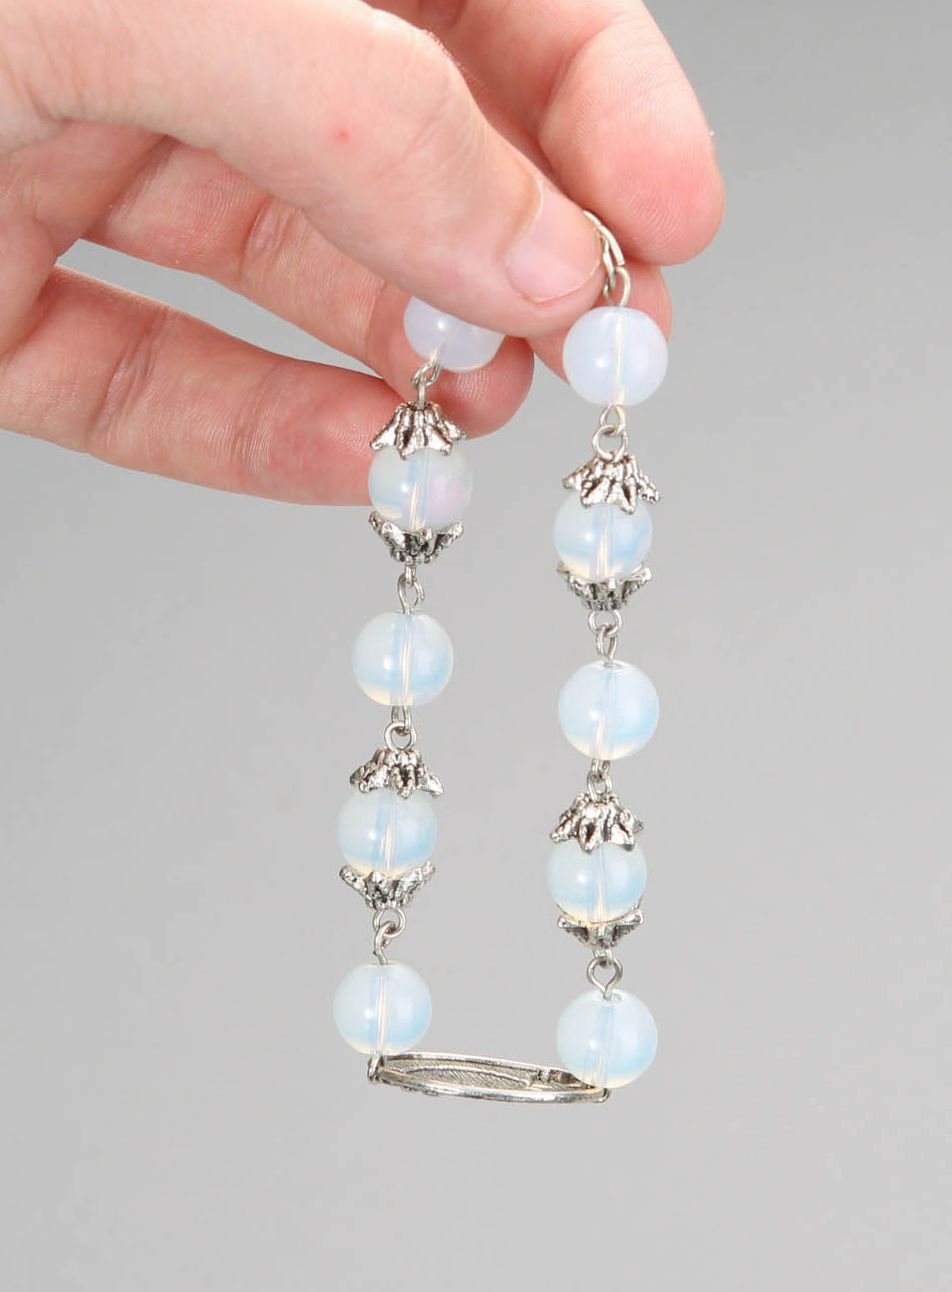 Bracelet with blue opals photo 3